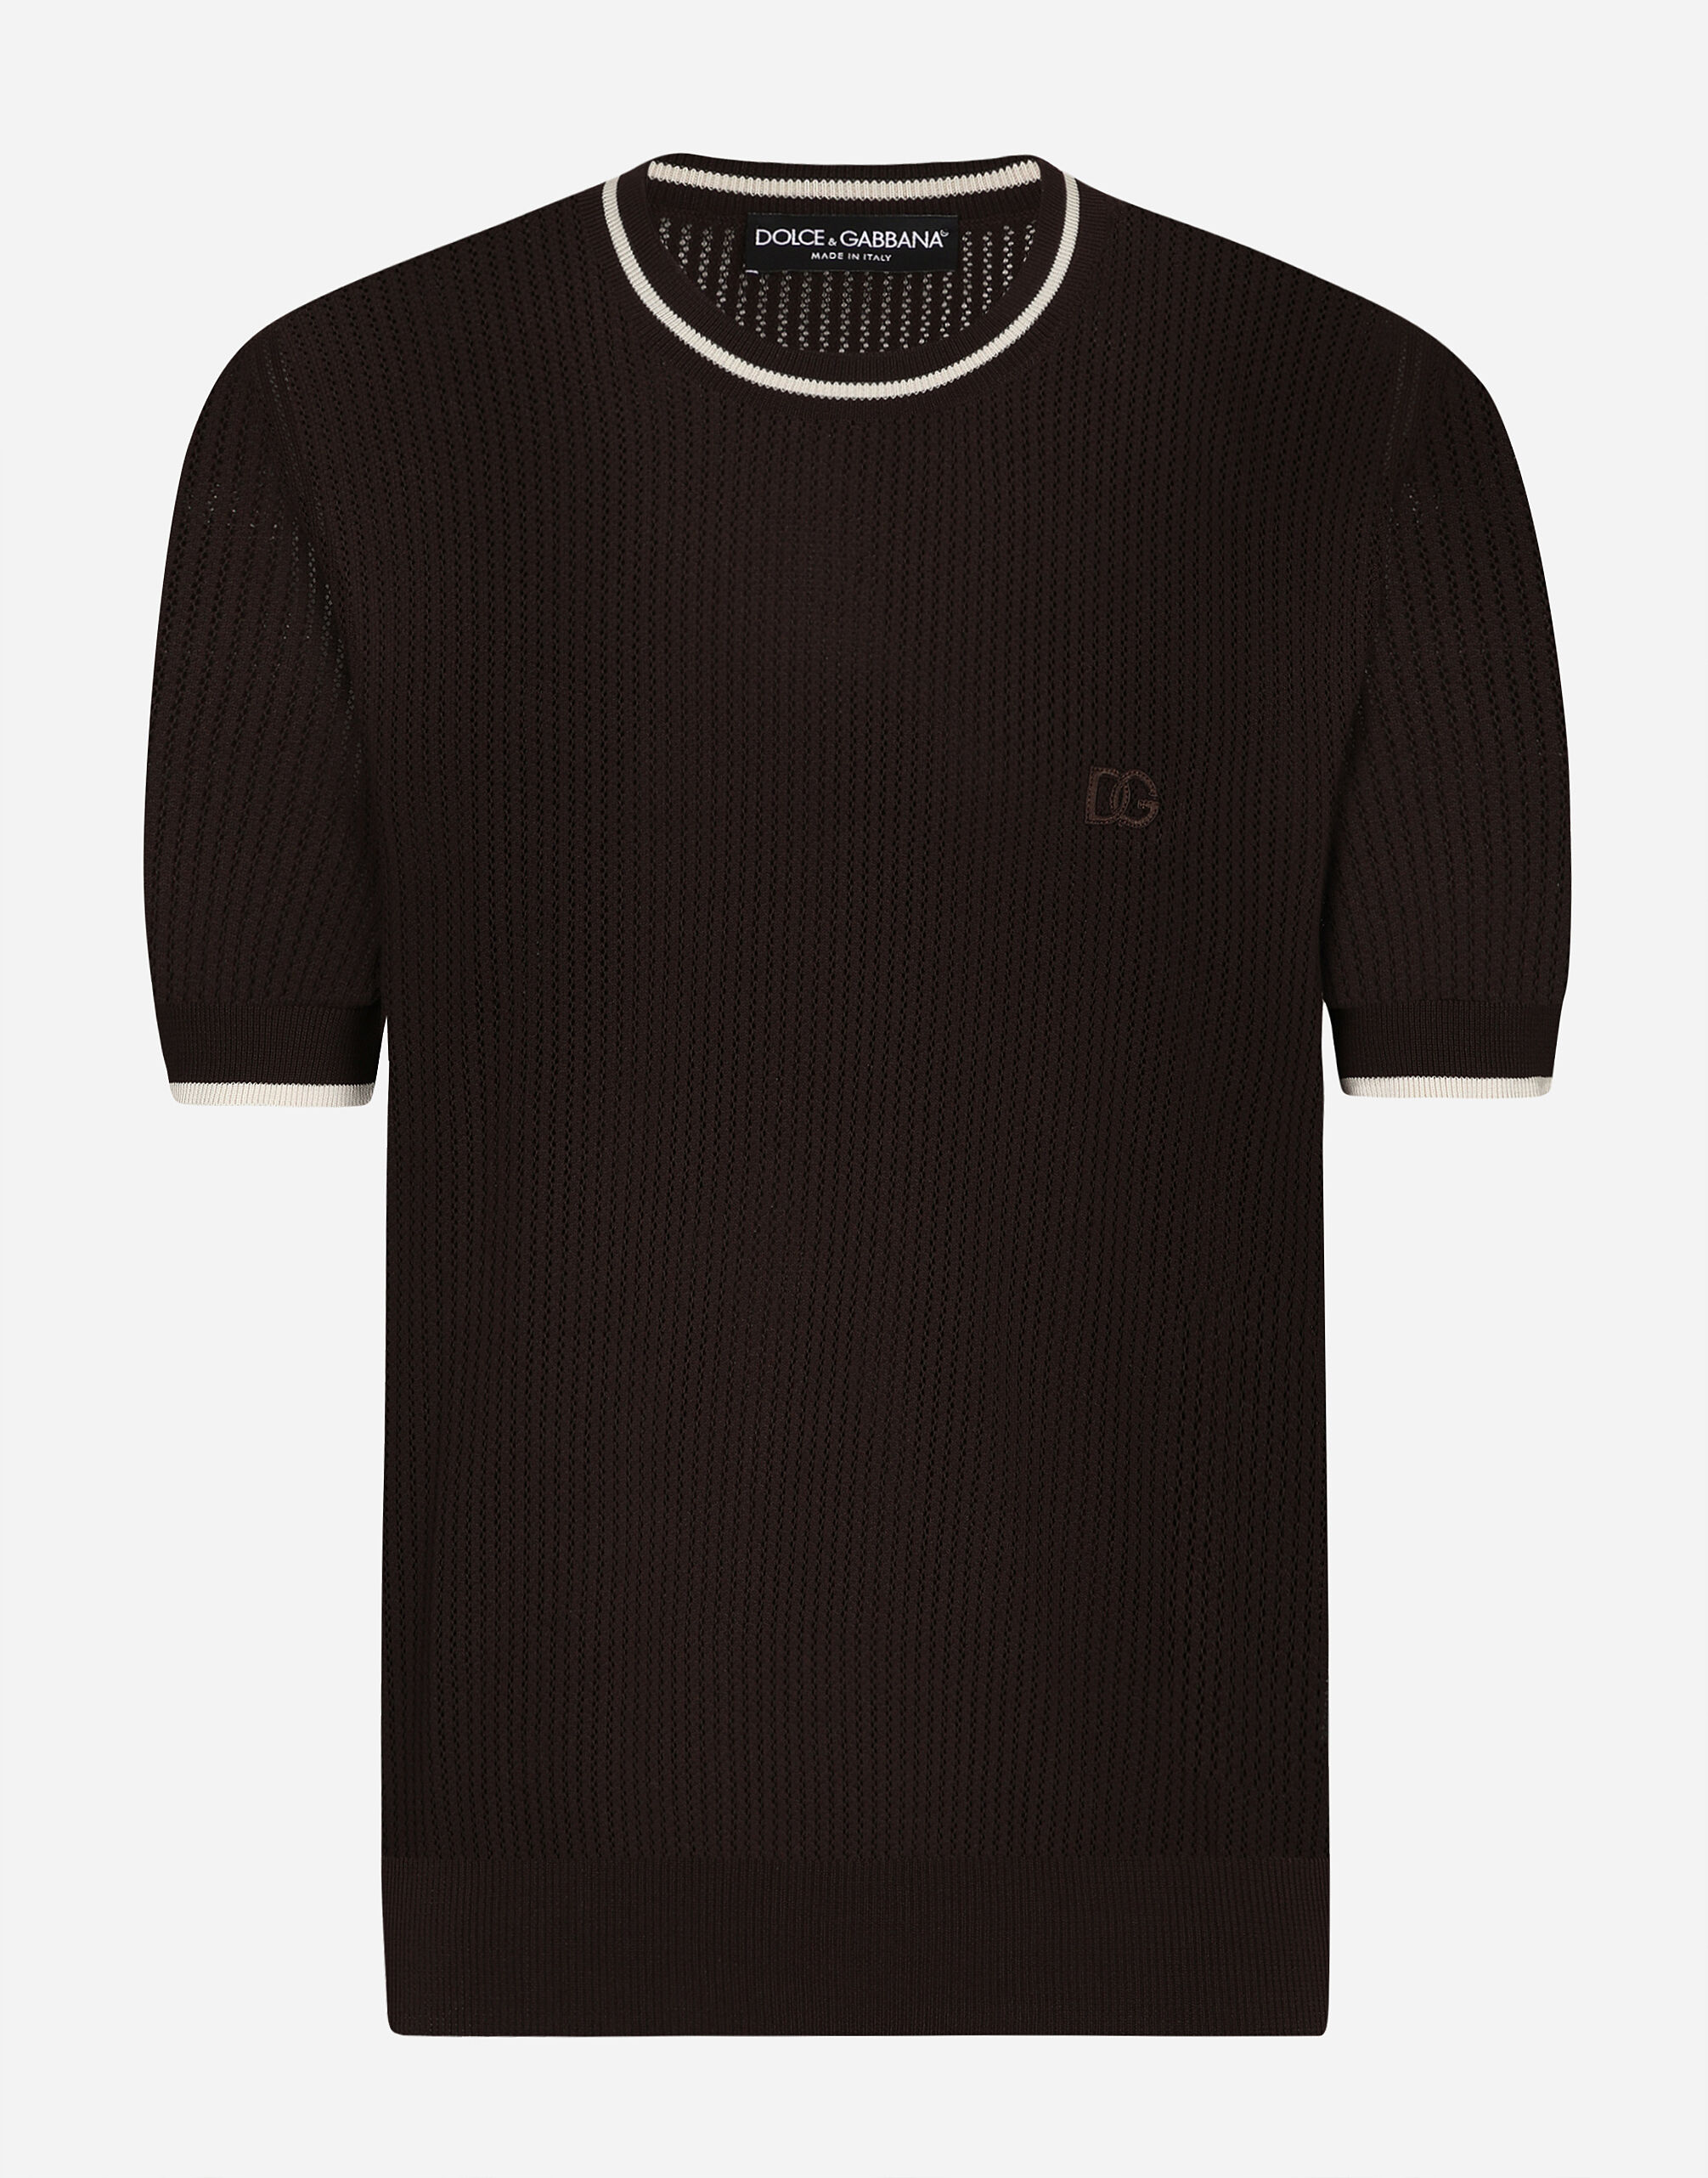 Dolce & Gabbana Round-neck cotton sweater with DG logo Print G9AZDTFS6N5